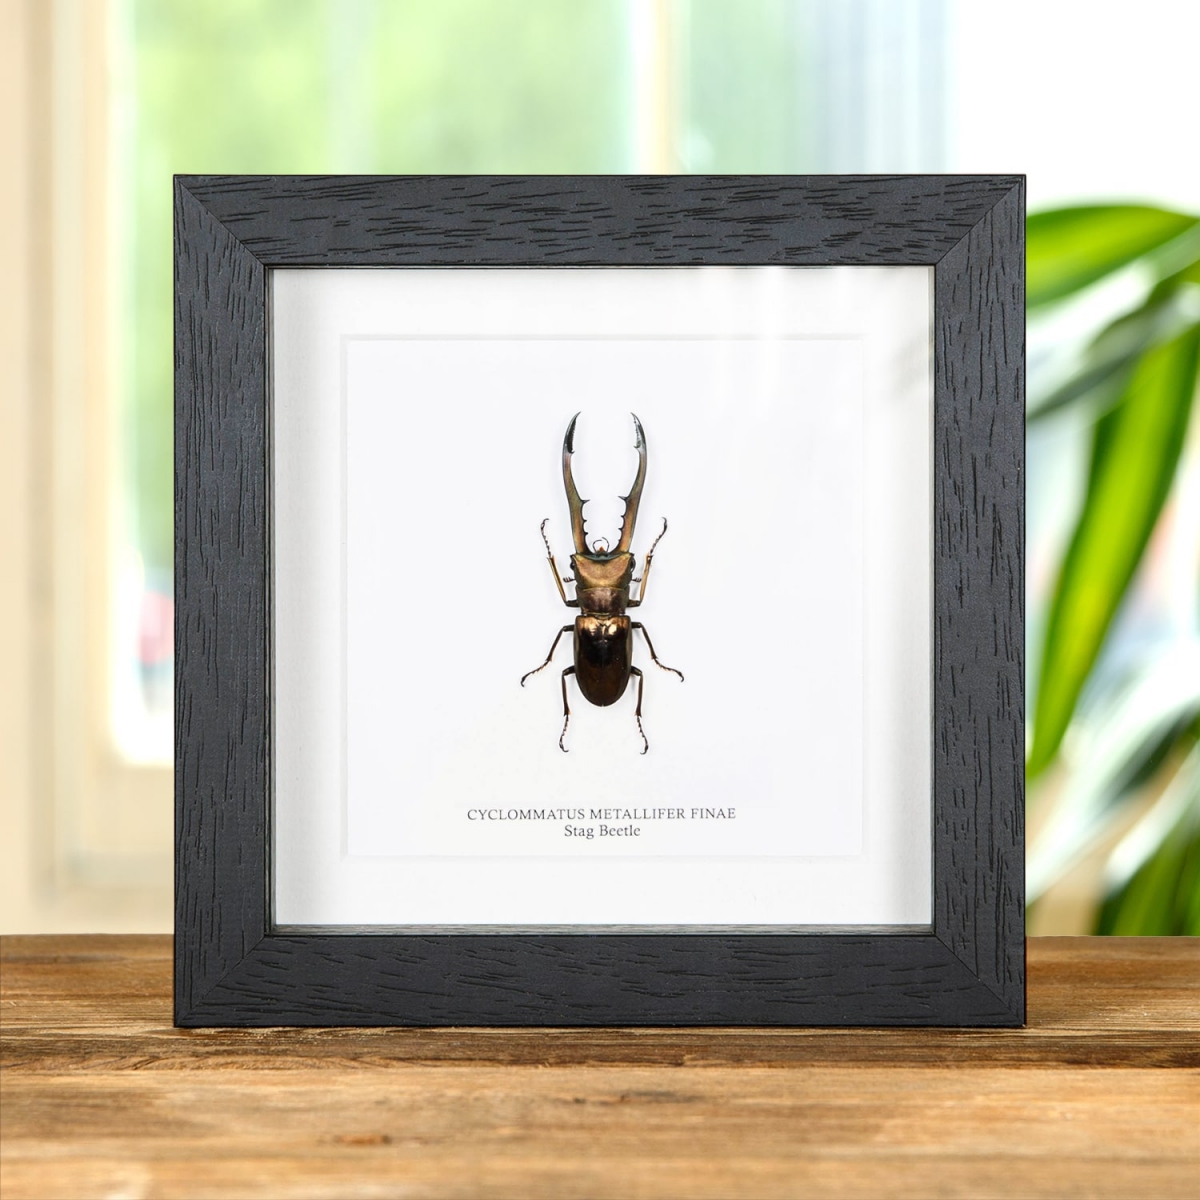 Minibeast Stag Beetle in Box Frame (Cyclommatus metallifer finae)